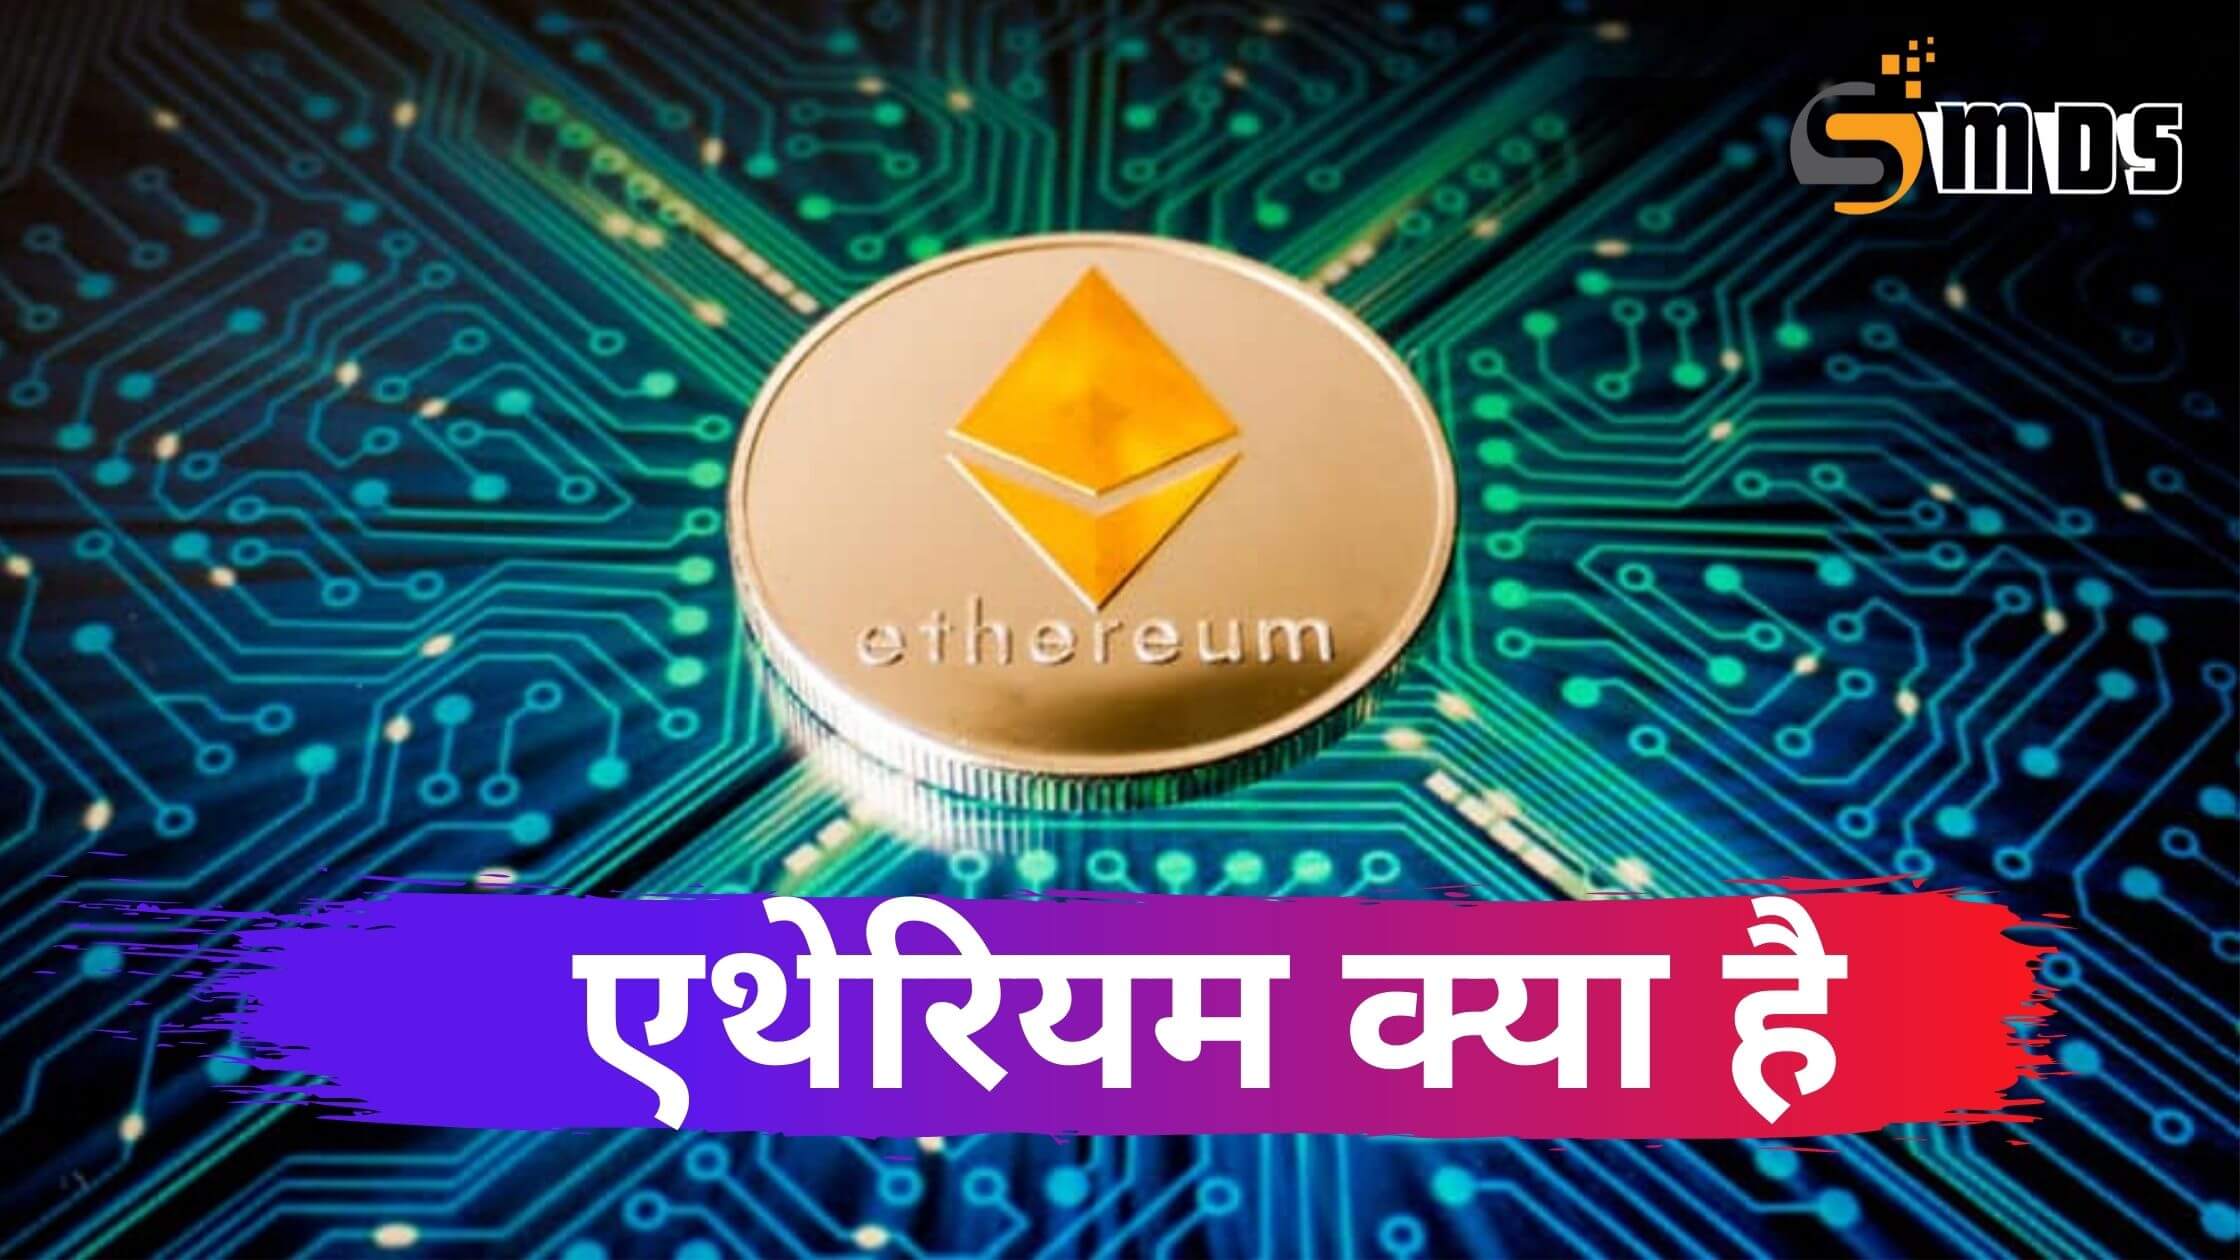 एथेरियम क्या है - What is Ethereum in Hindi